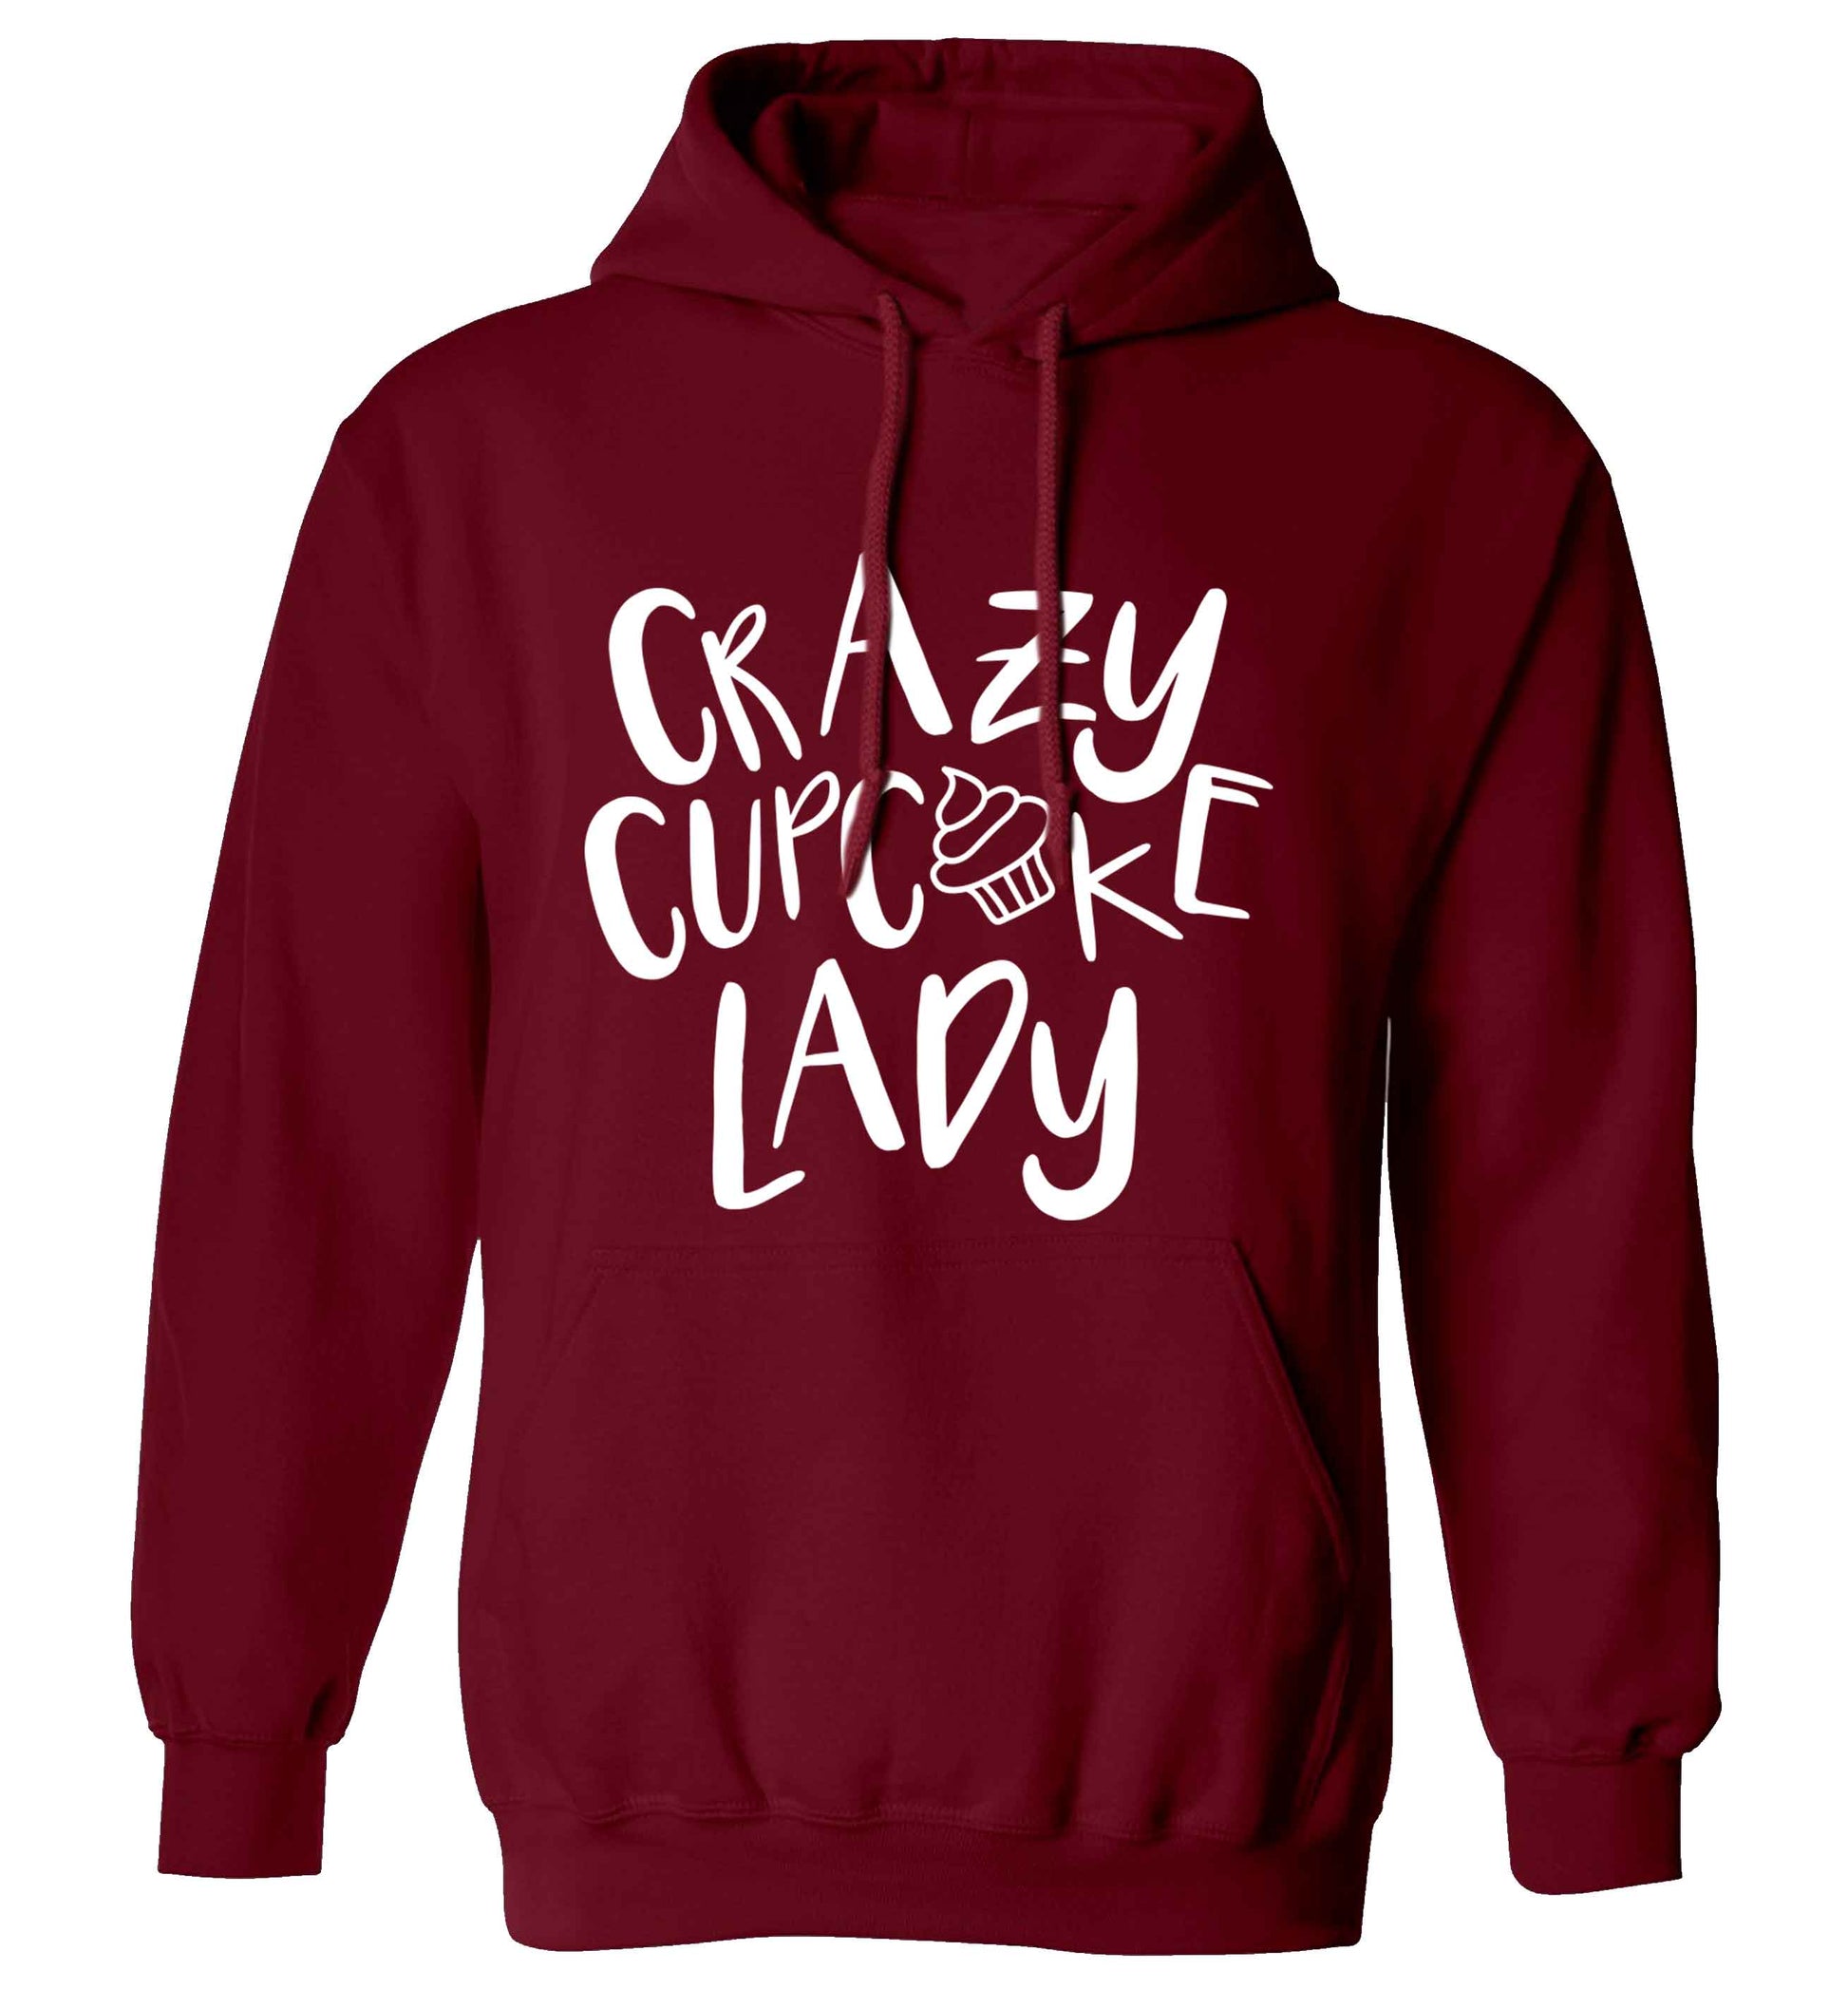 Crazy cupcake lady adults unisex maroon hoodie 2XL